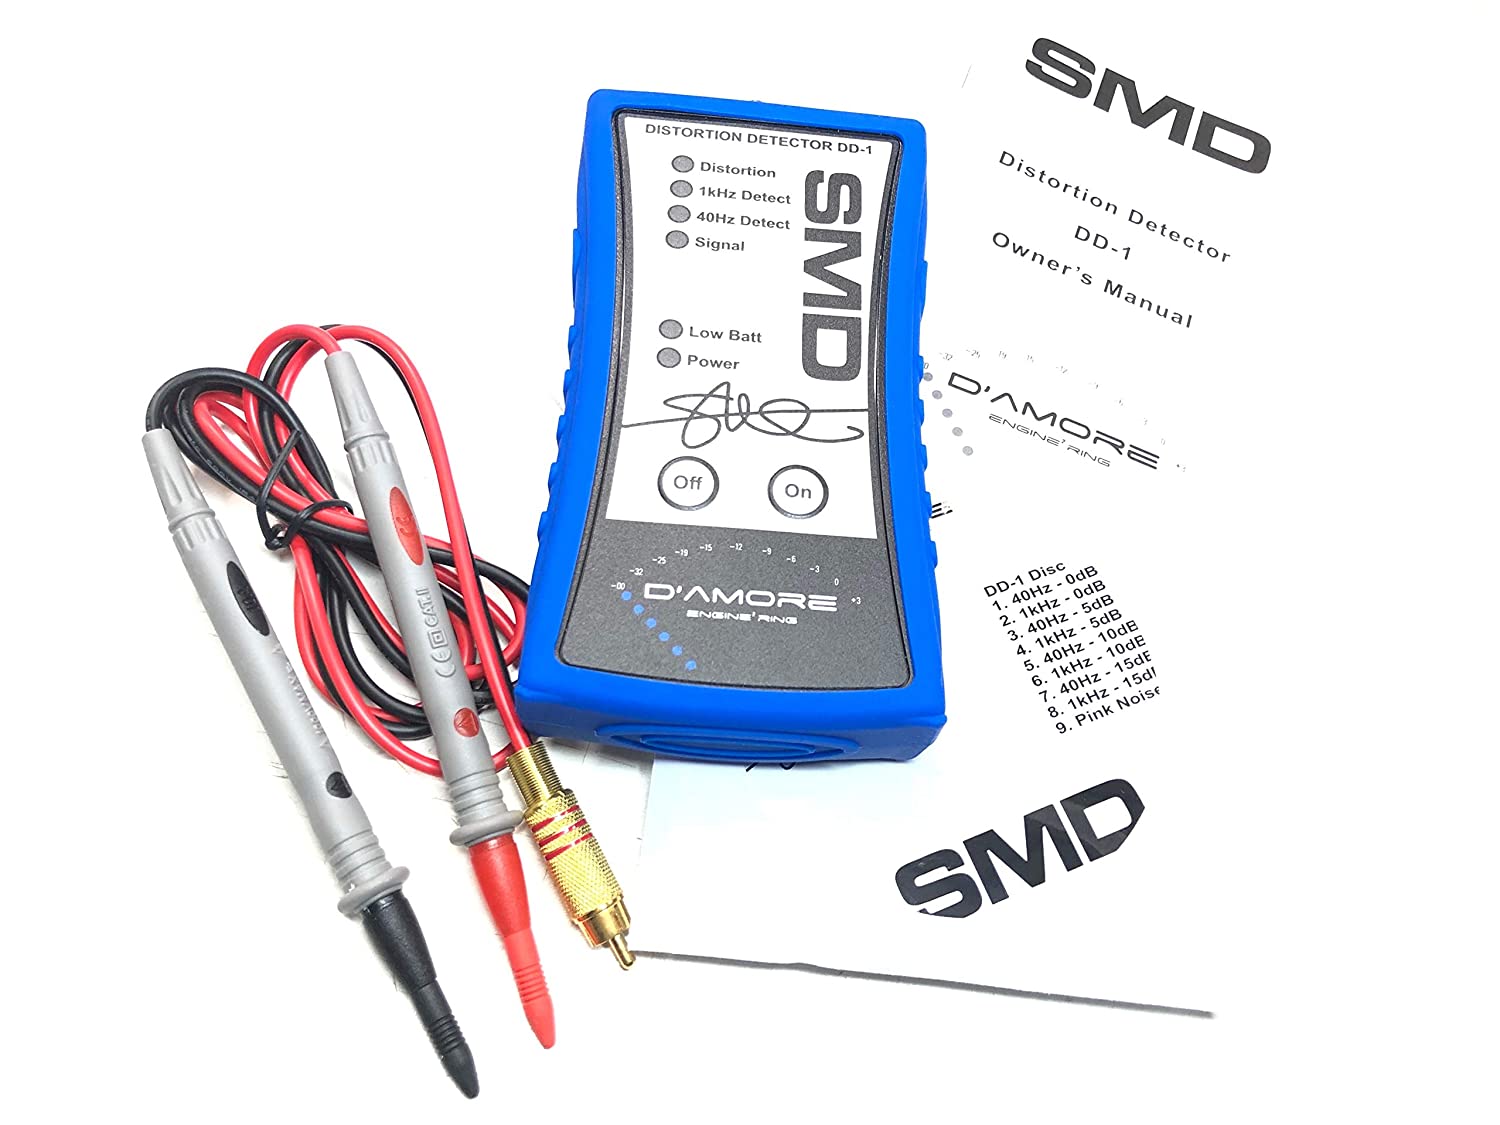 SMD DD-1 Distortion Detector